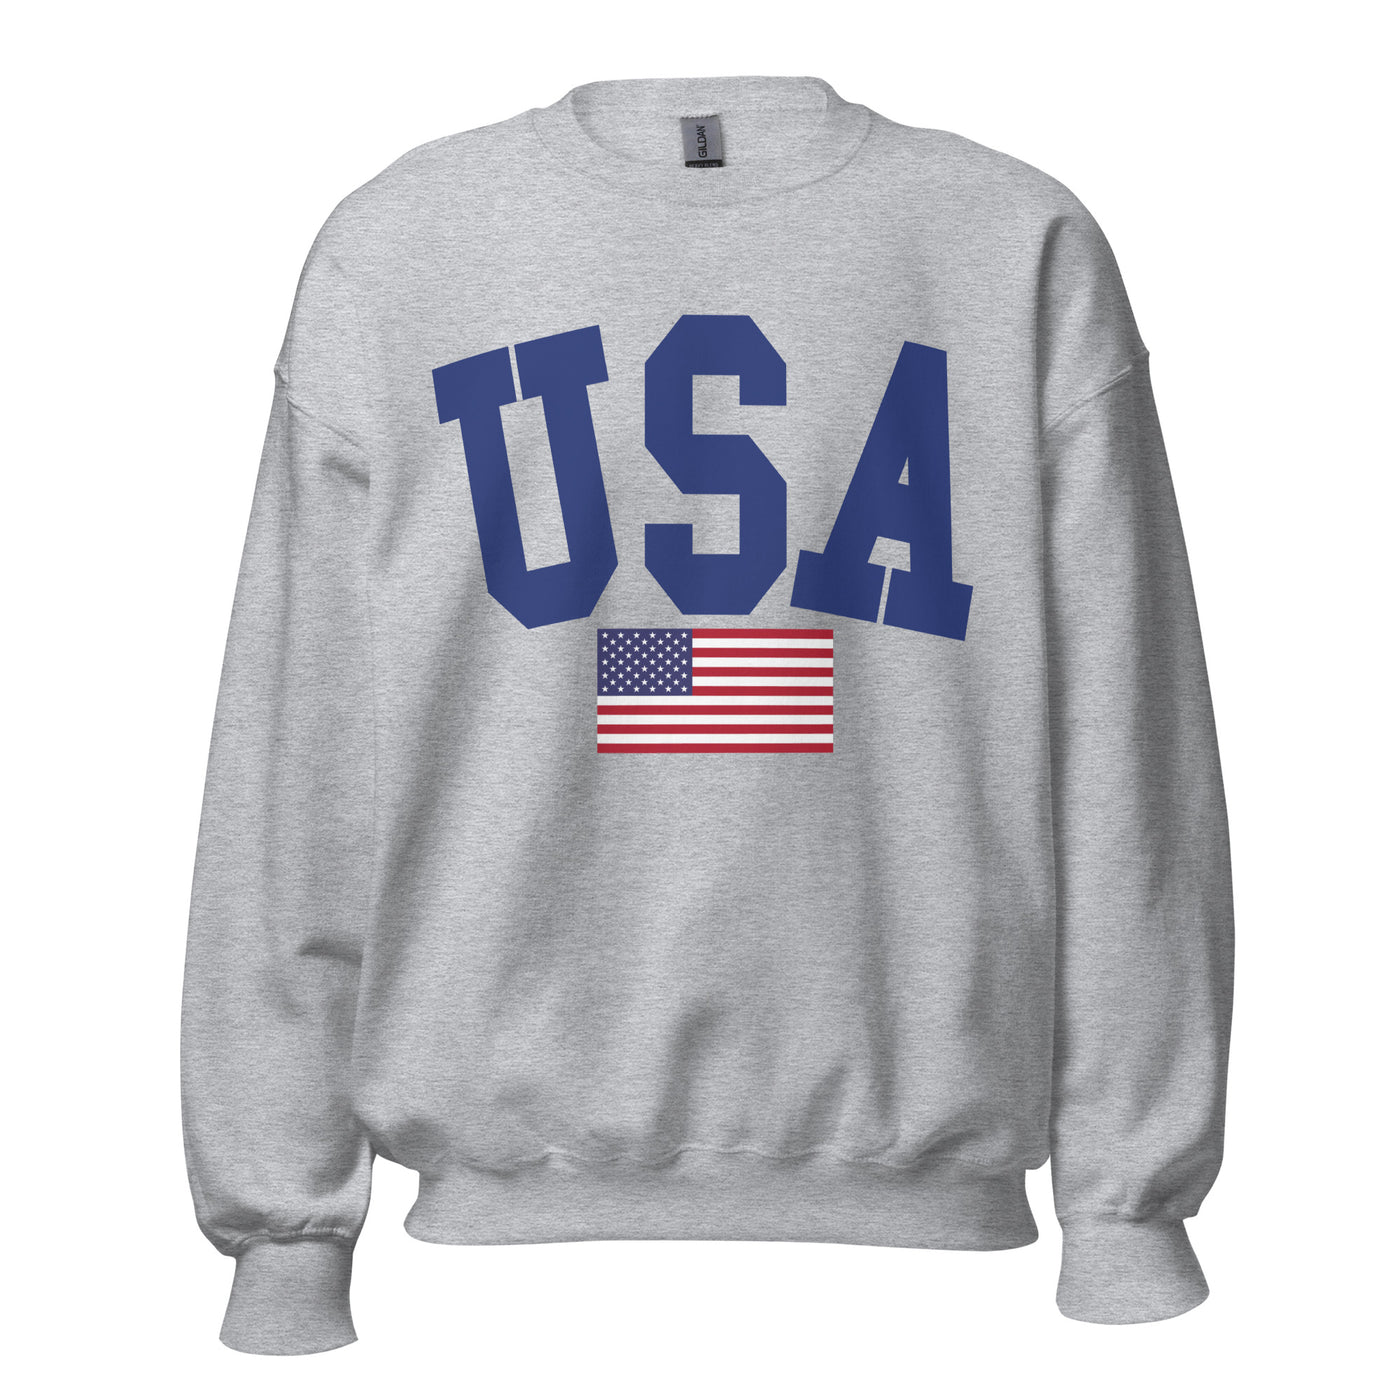 Monogrammed 'USA Classic' Crewneck Sweatshirt